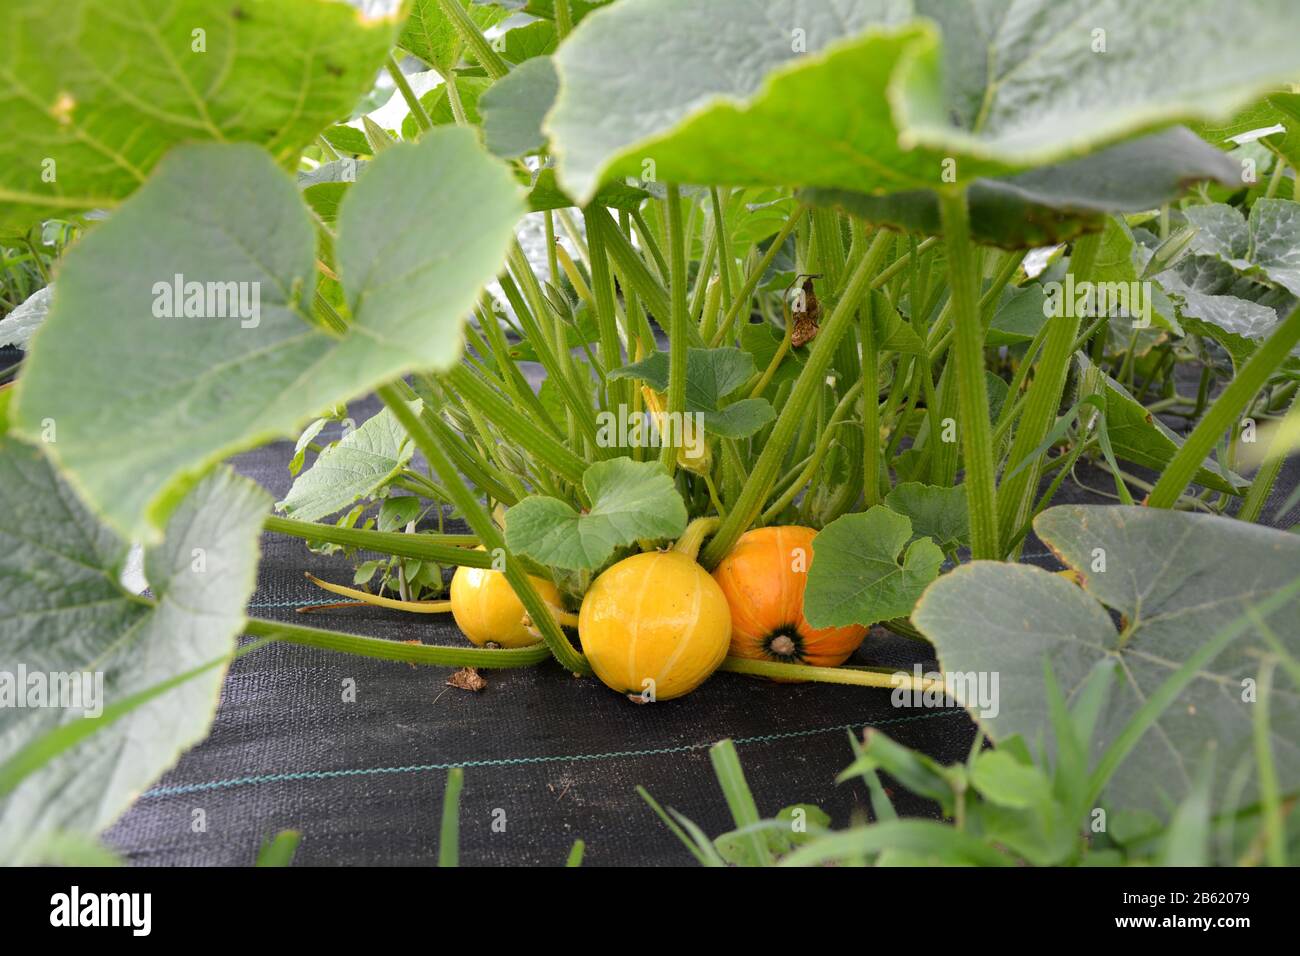 Winter squash Pottimarron growing in garden Stock Photo